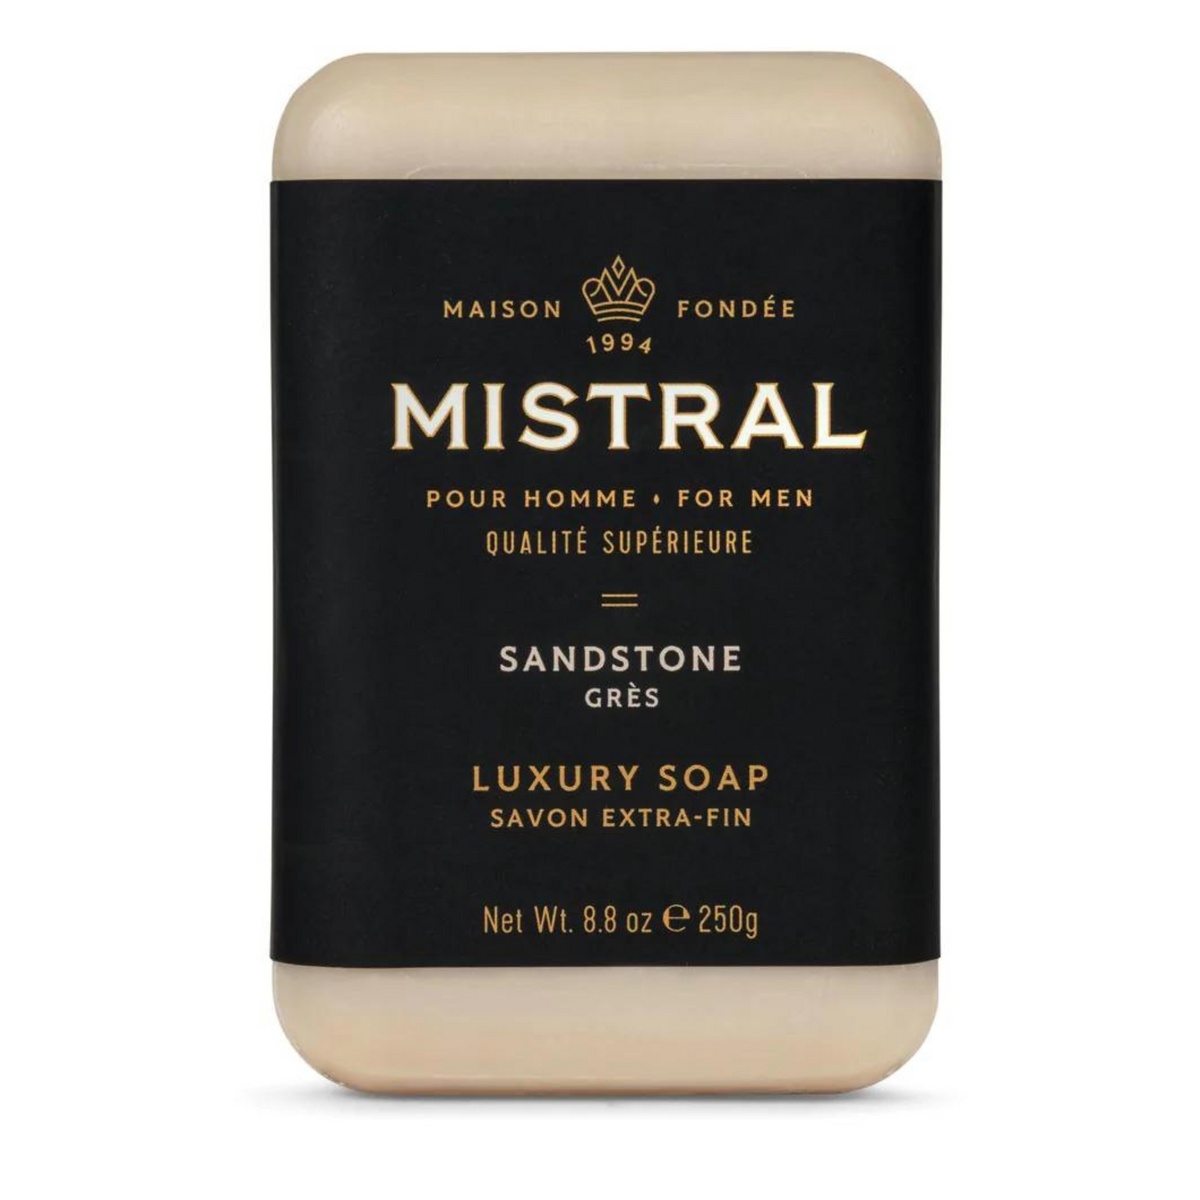 Primary Image of Mistral Sandstone Bar Soap (8.8 oz)